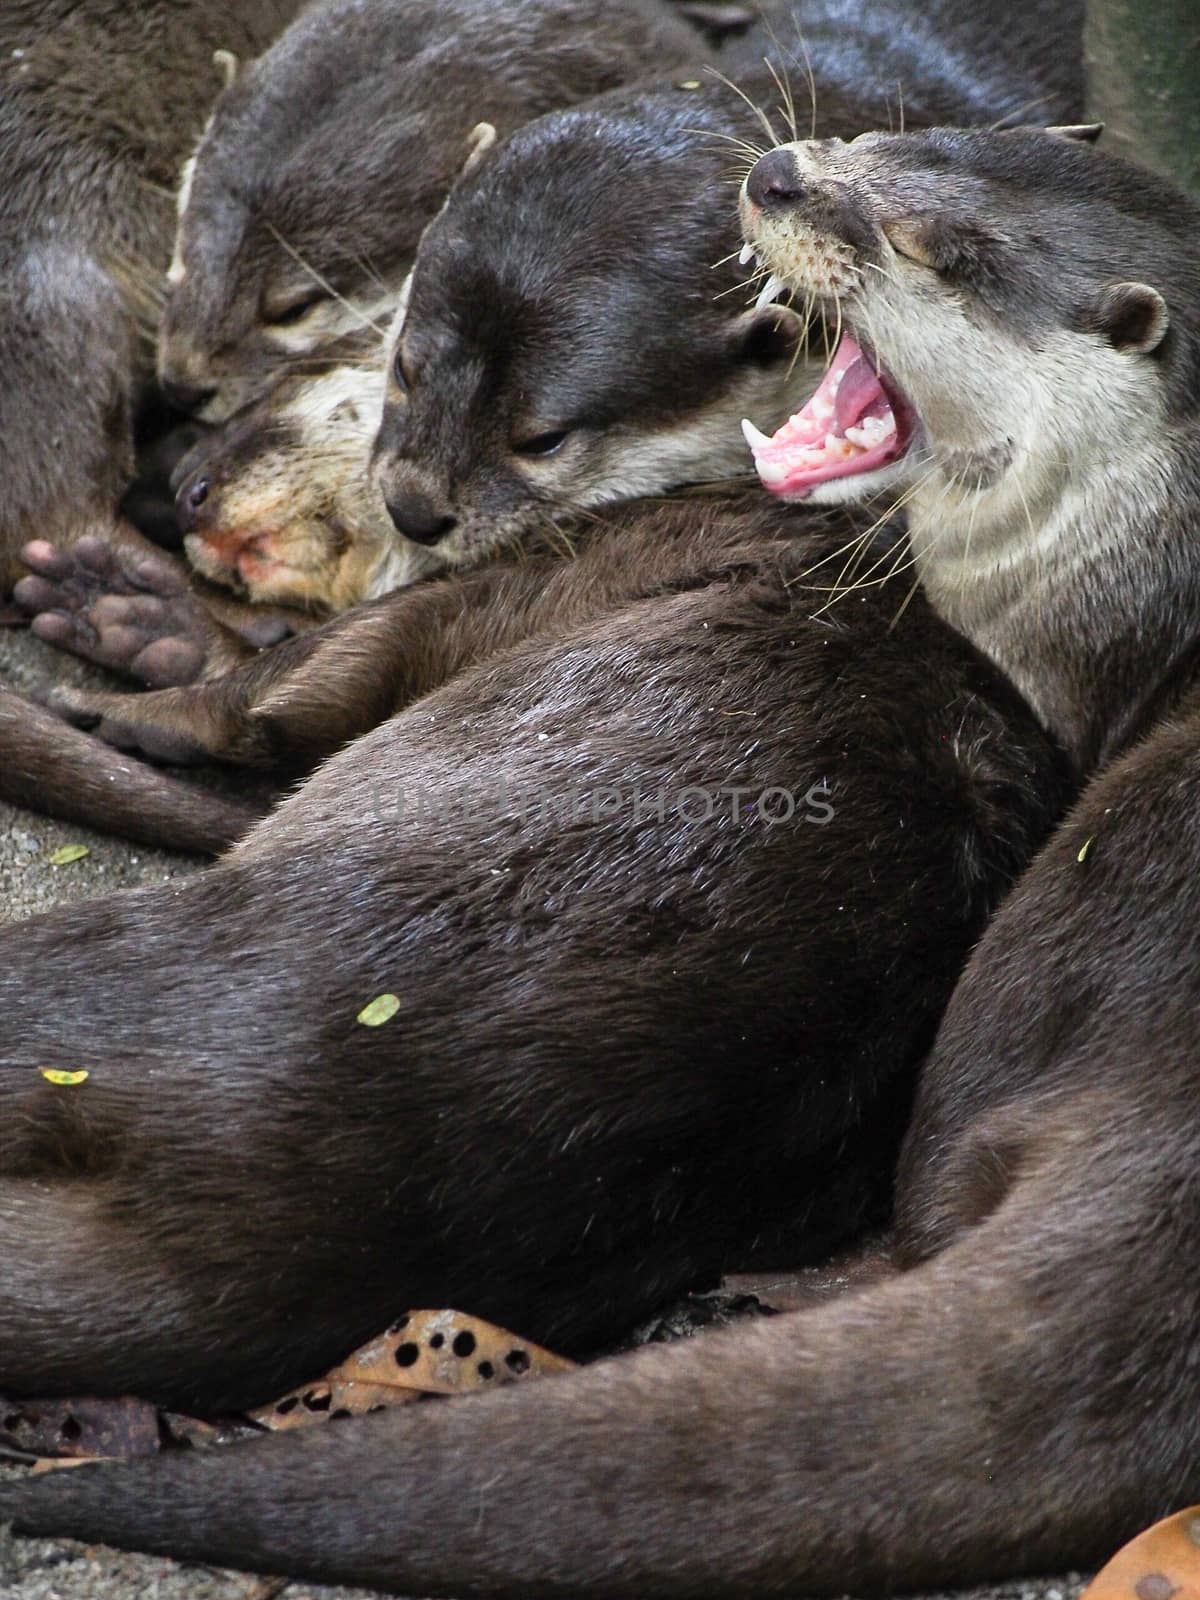 Group of Sleepy Otters Snuggling by NikkiGensert